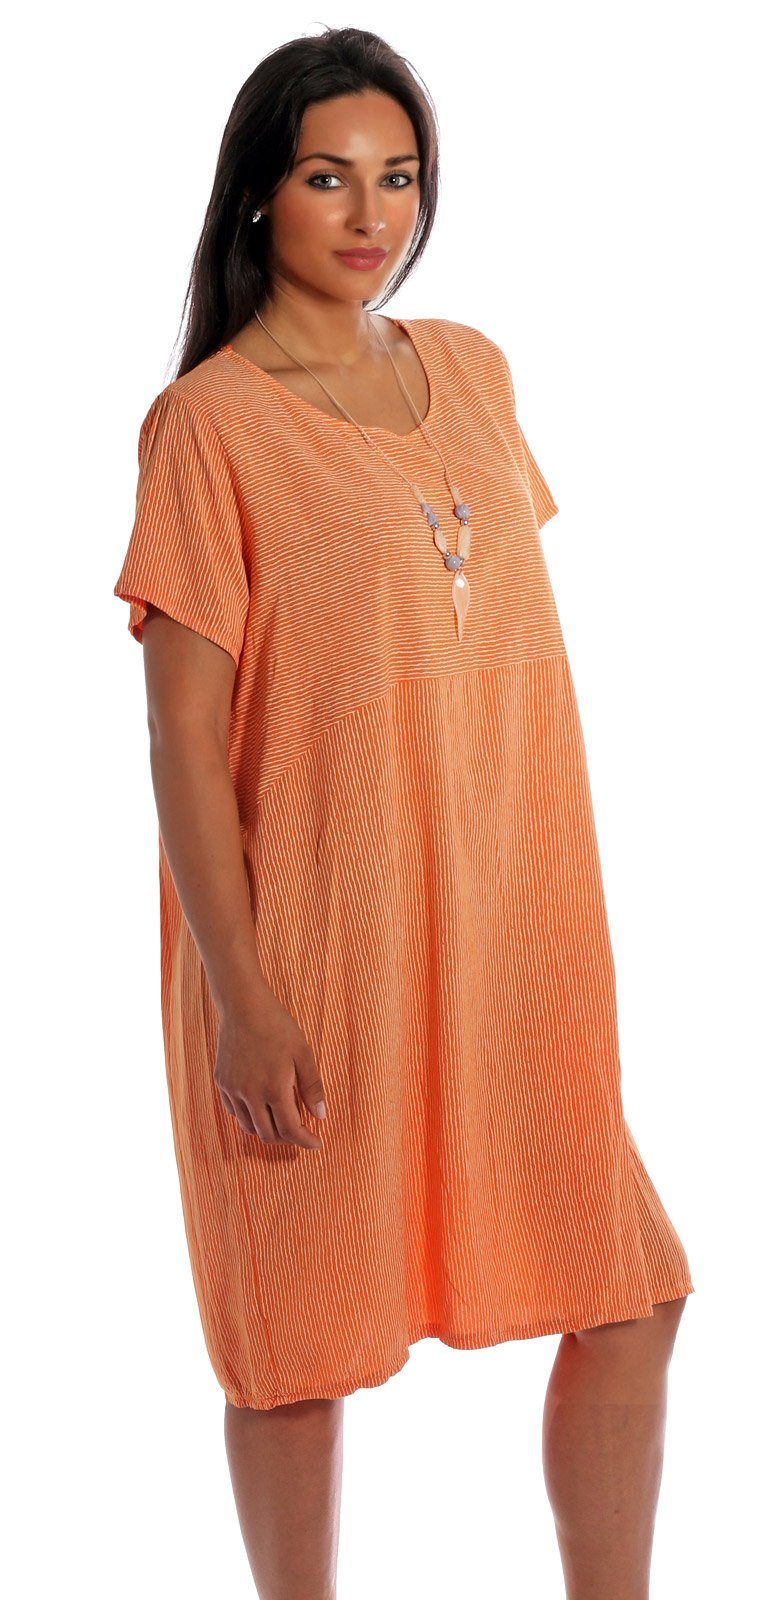 Moda Sommerkleid mit Modeschmuckkette Orange "Paula" gestreift Shirtkleid Charis